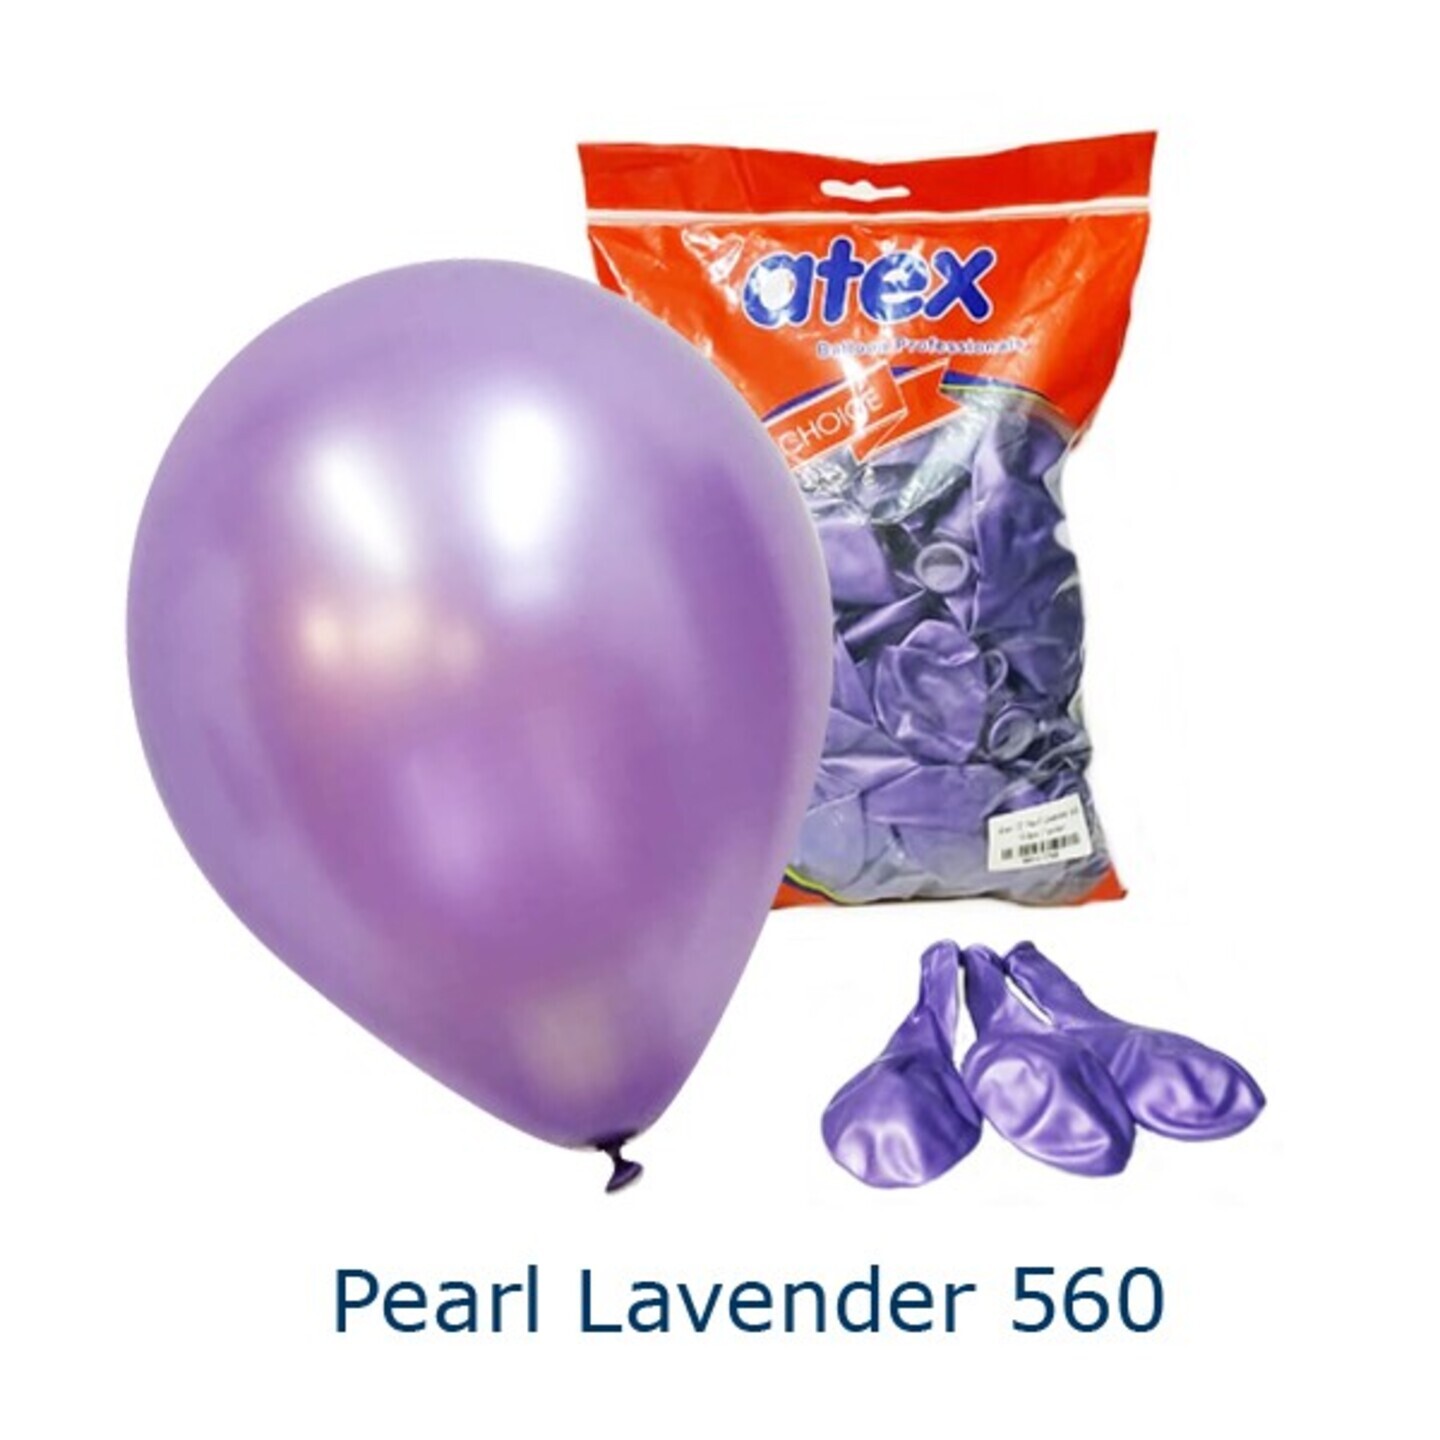 Pearl Lavender 560